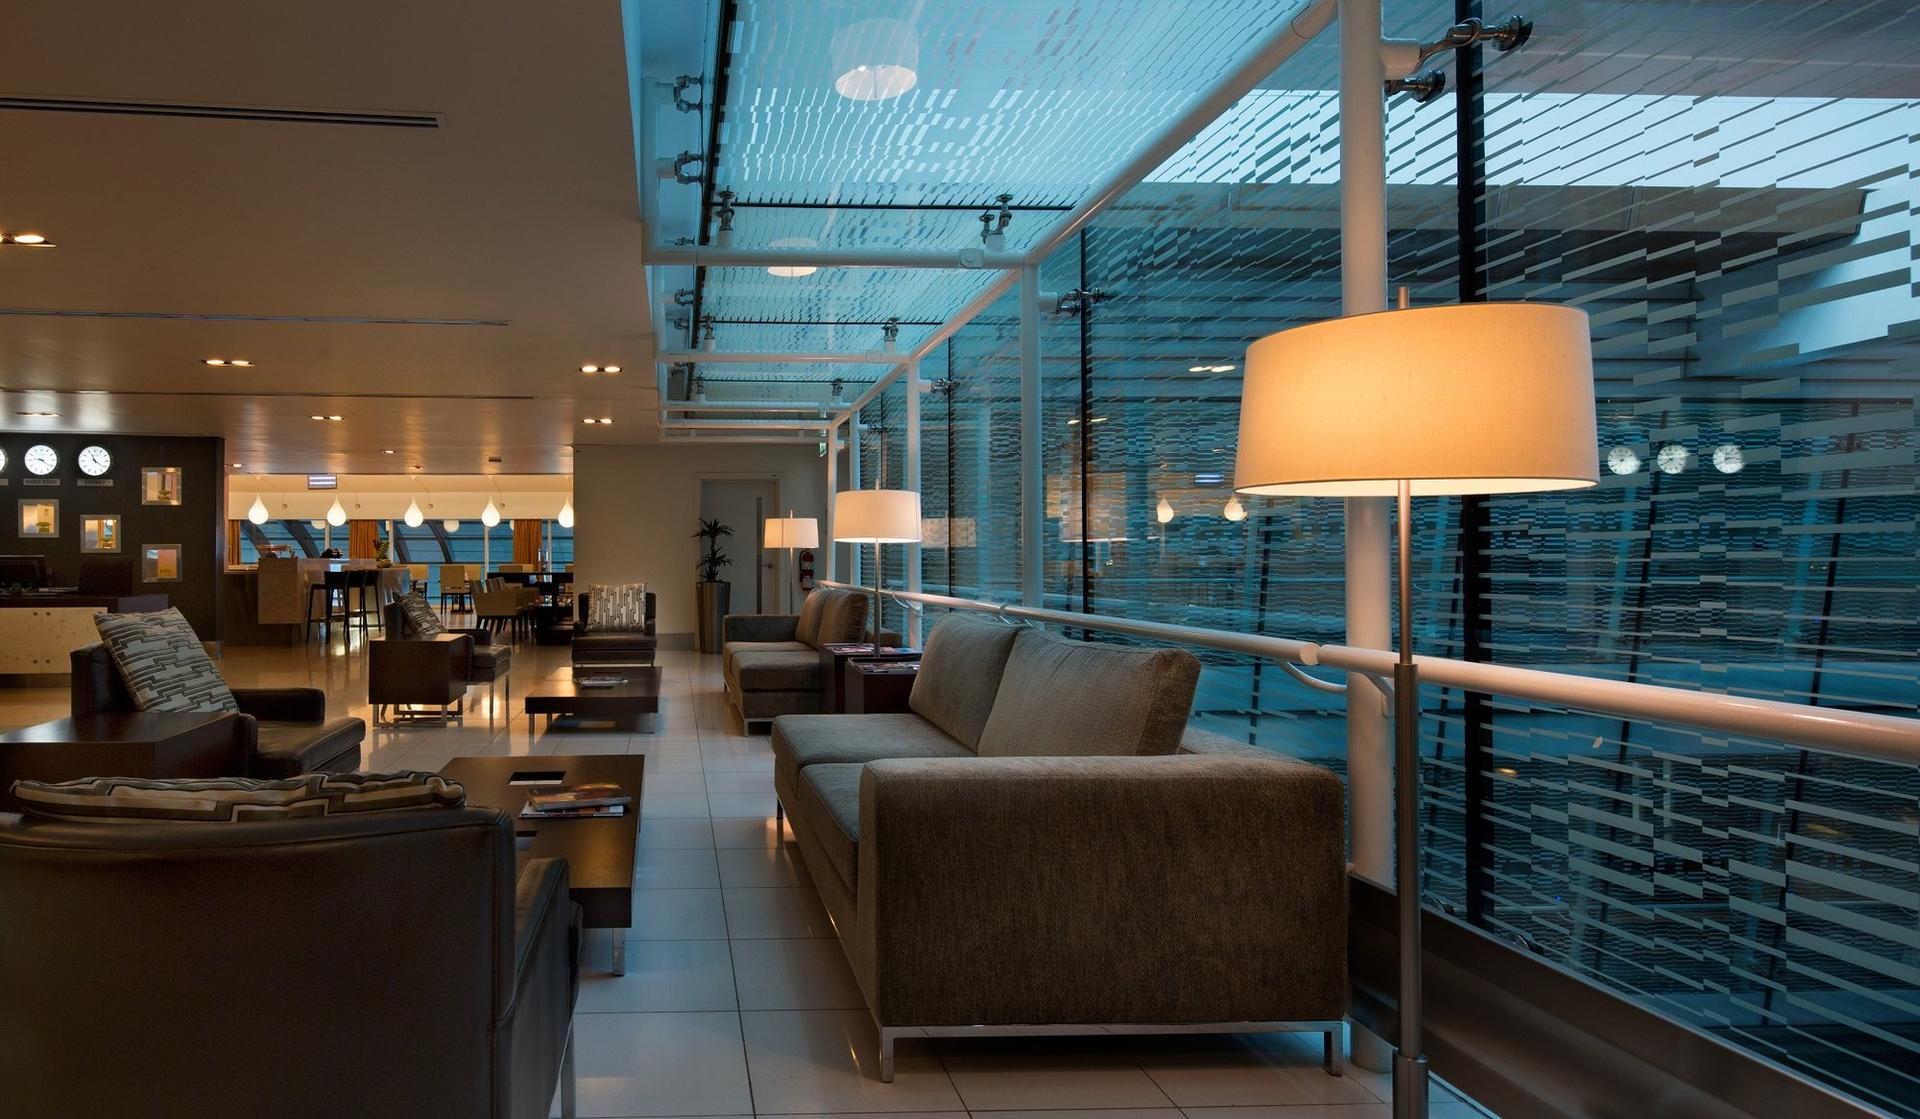 Dubai International Hotel (Concourse B) image 7 of 25